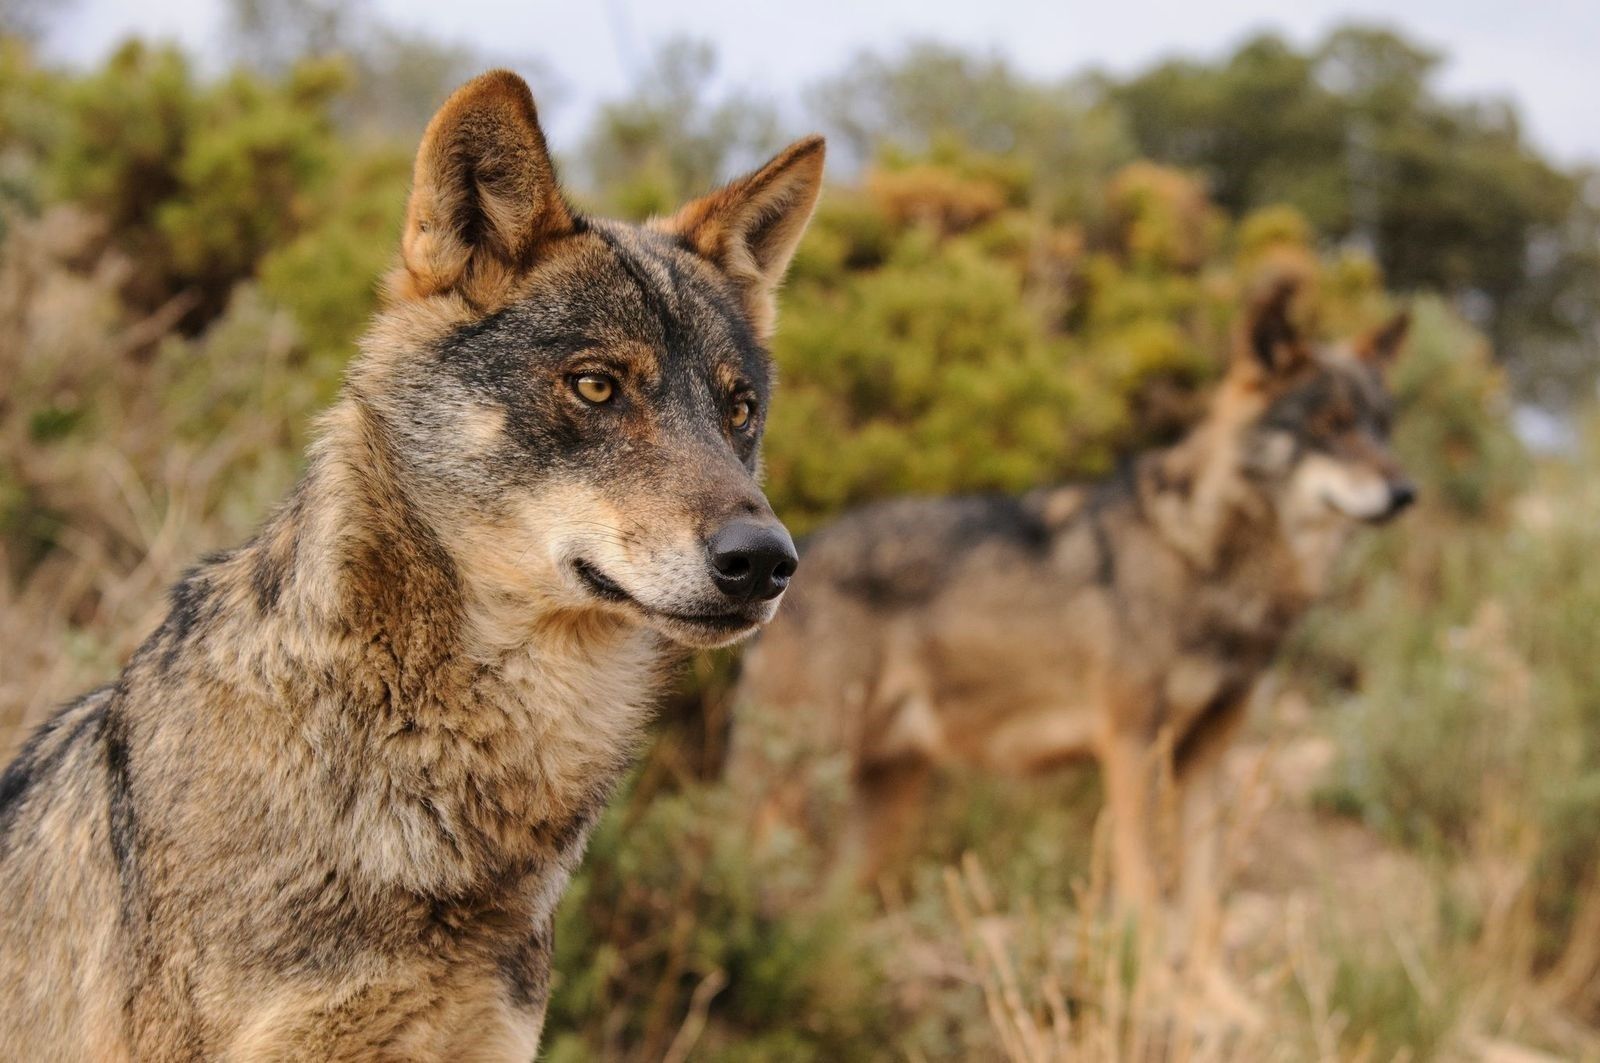 Cazar lobos estará prohibido en España desde este miércoles